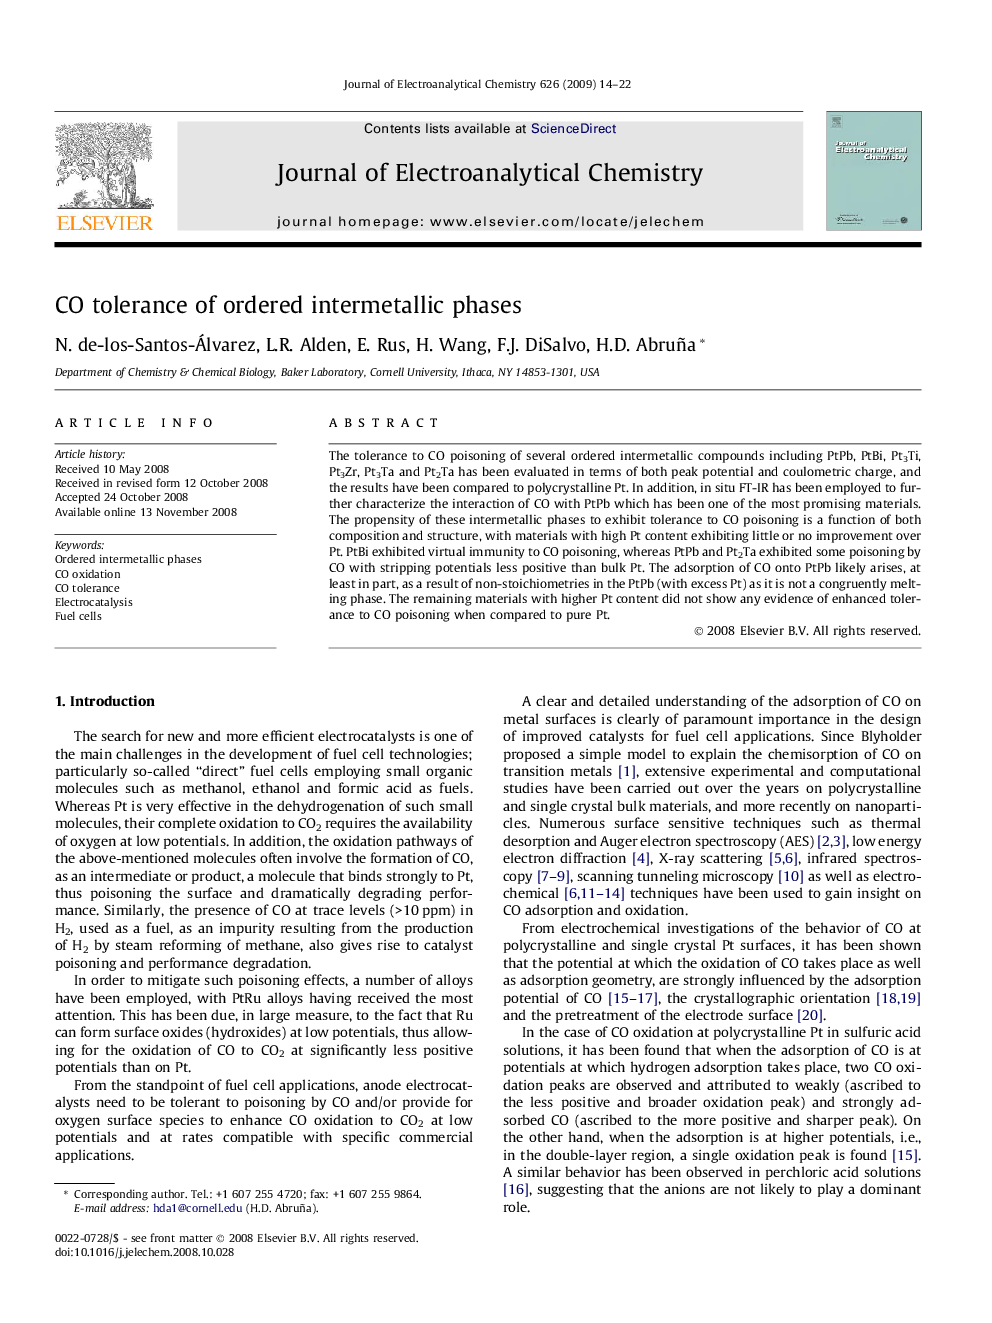 CO tolerance of ordered intermetallic phases